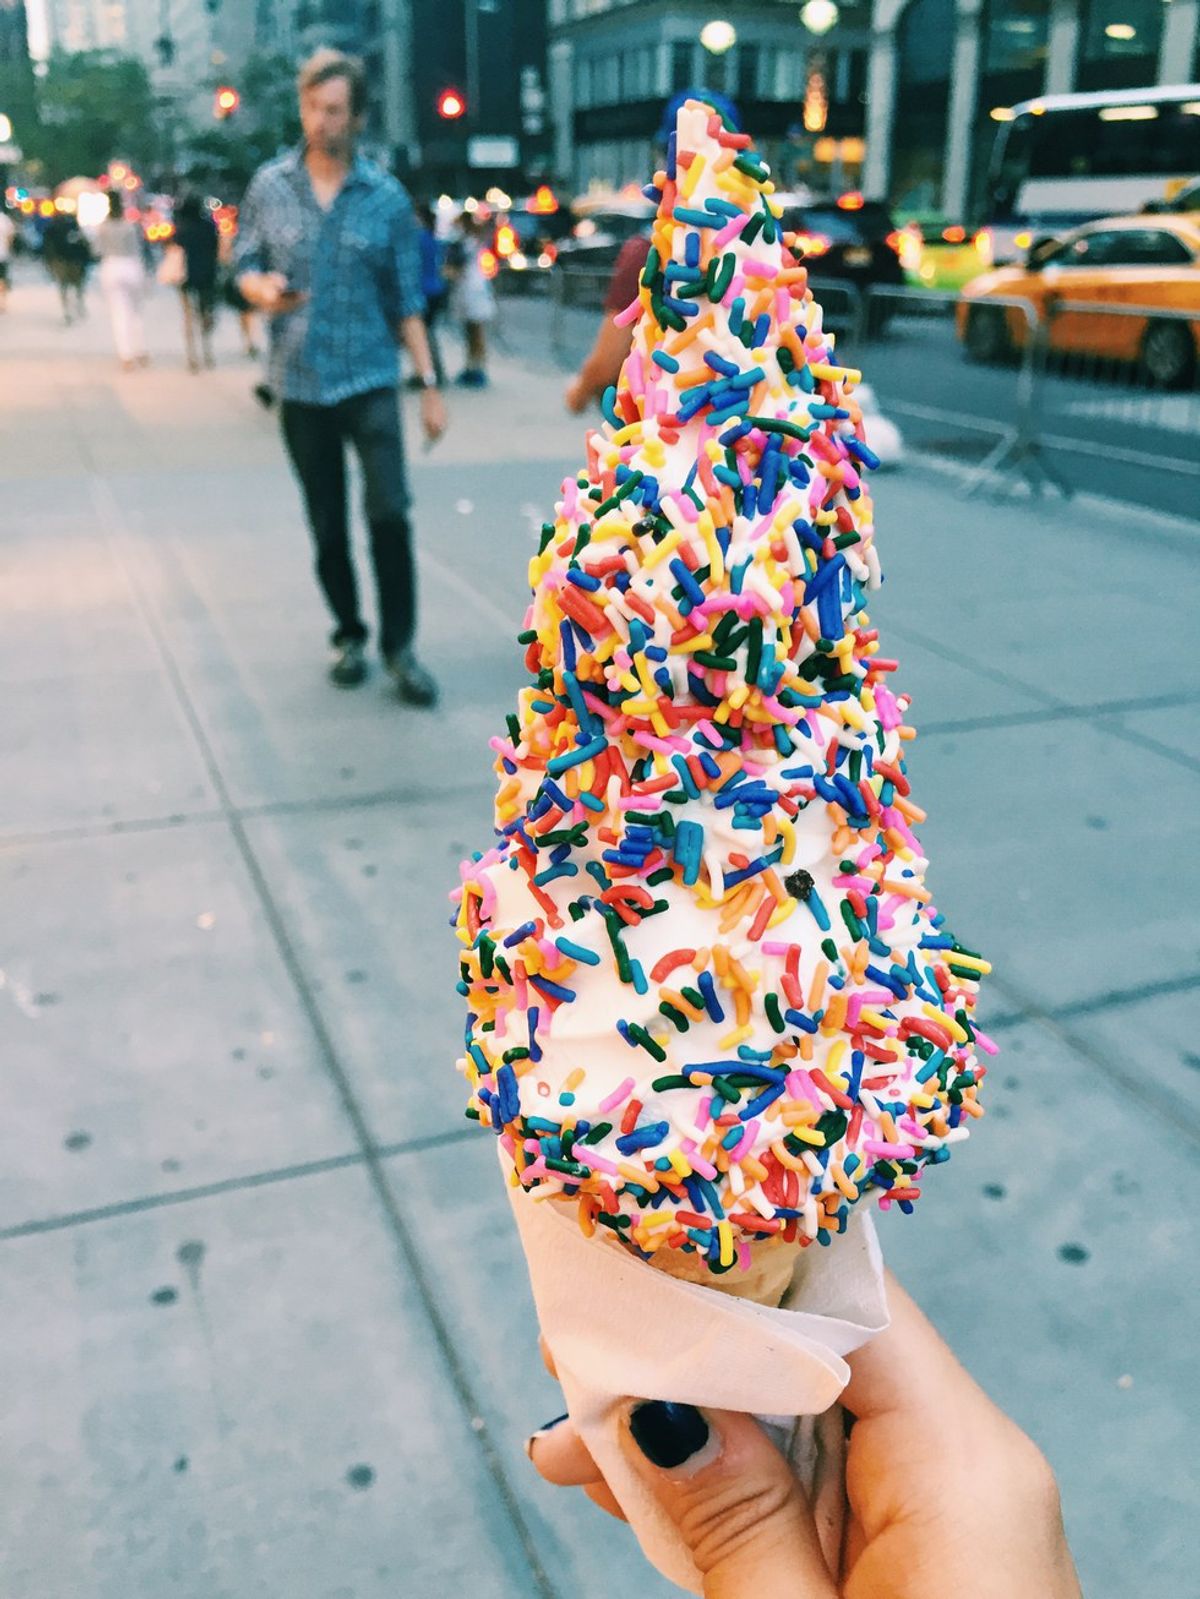 Finding the Best Ice Cream in NYC: New York Ice Cream Trucks